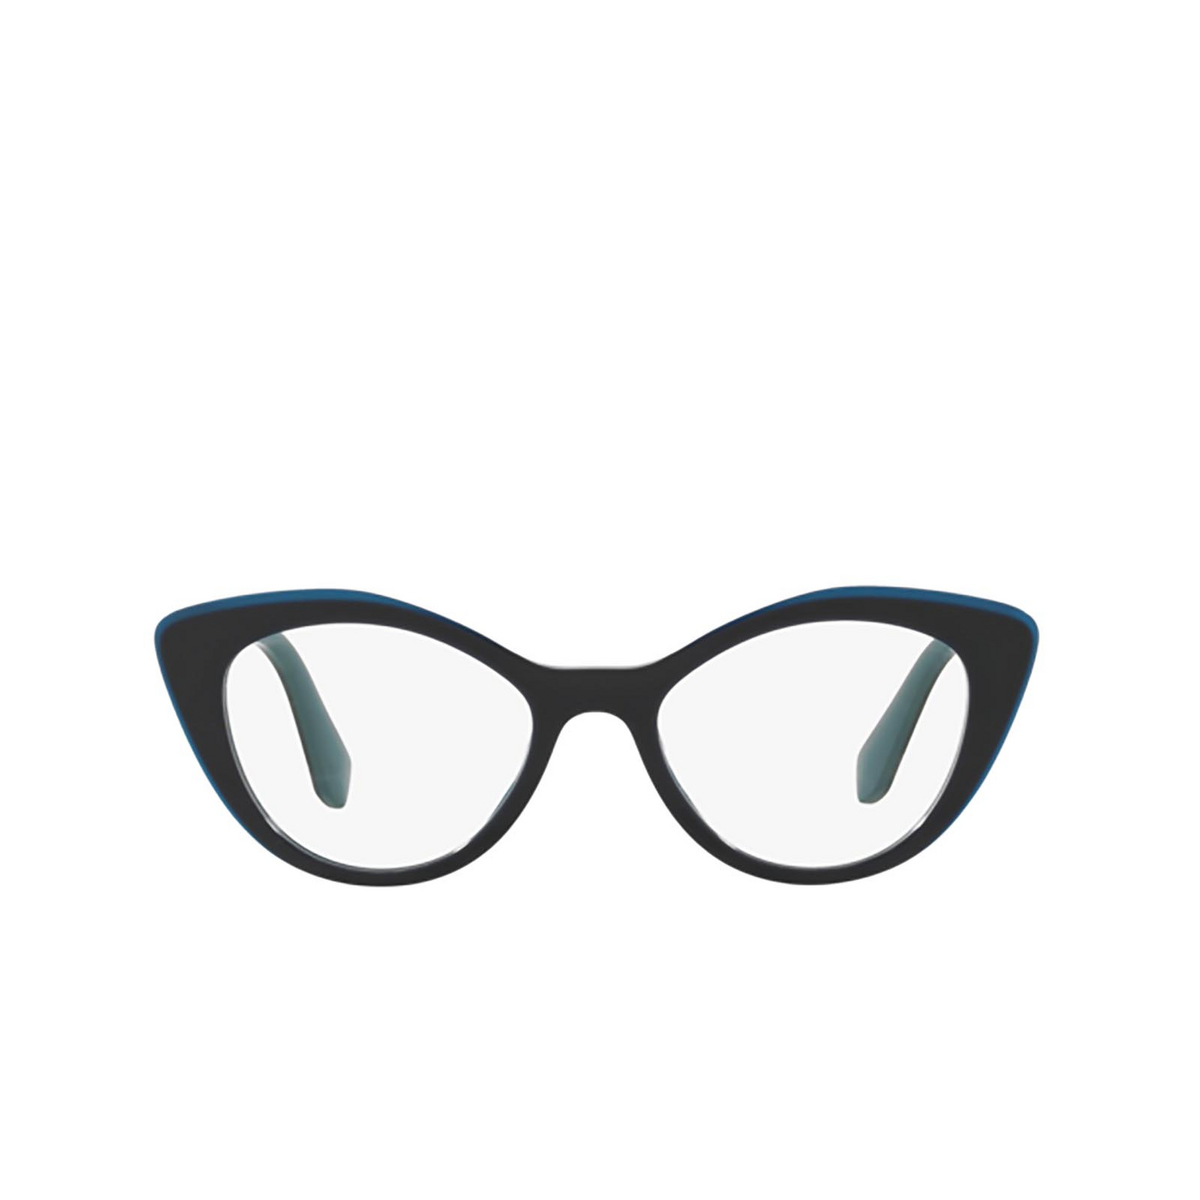 Miu Miu® Cat-eye Eyeglasses: MU 01RV color Blue / Top Opal Blue TMY1O1 - front view.